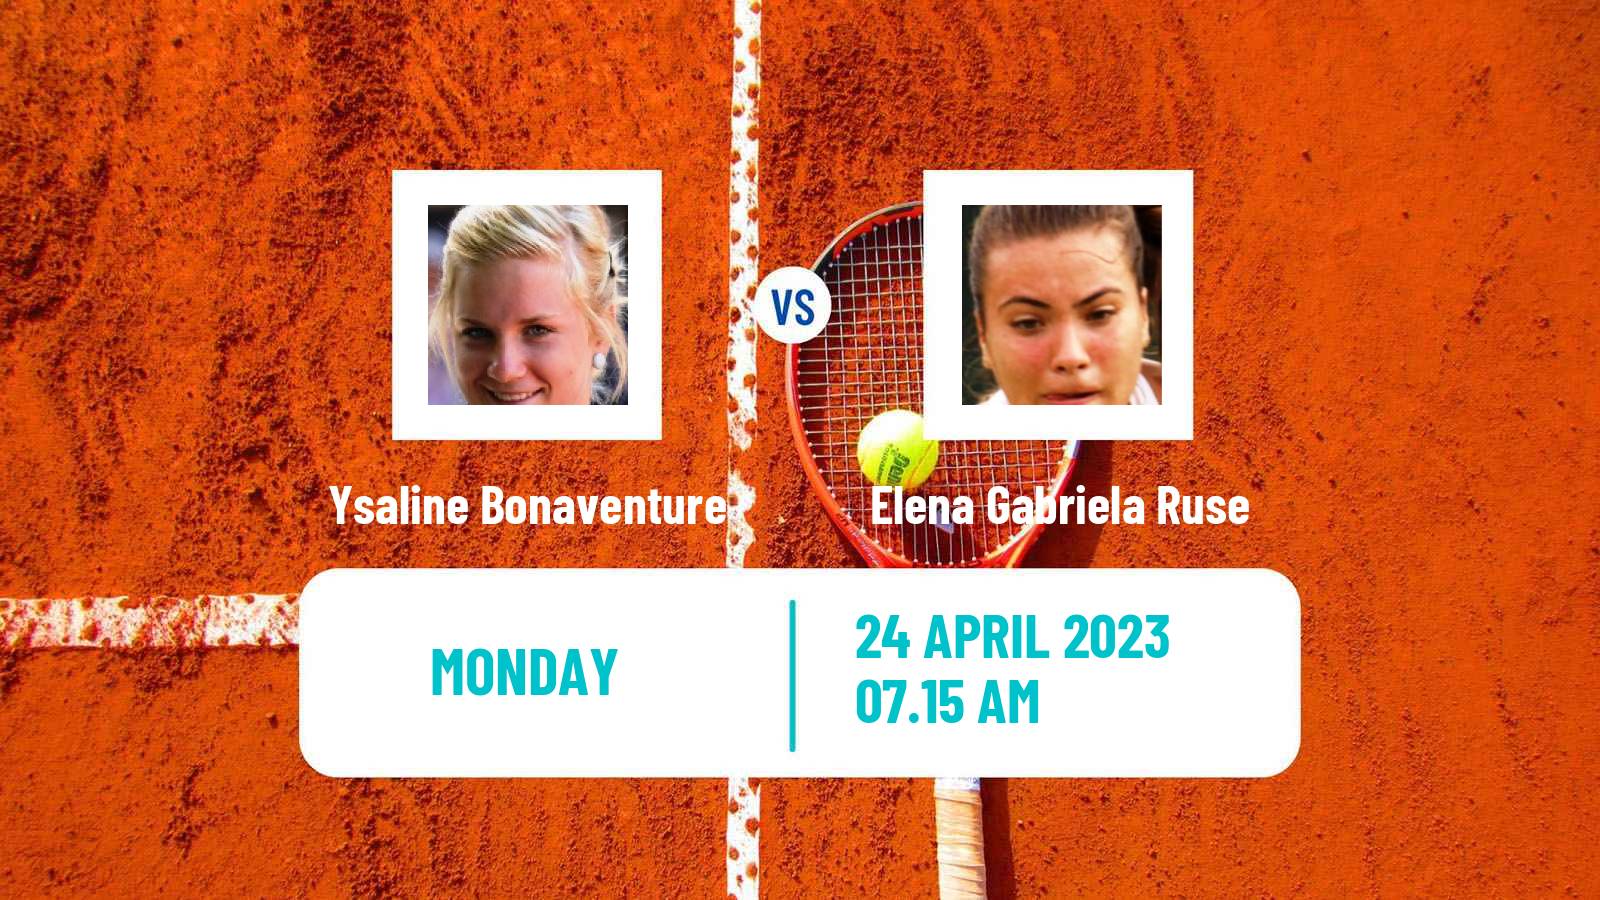 Tennis WTA Madrid Ysaline Bonaventure - Elena Gabriela Ruse